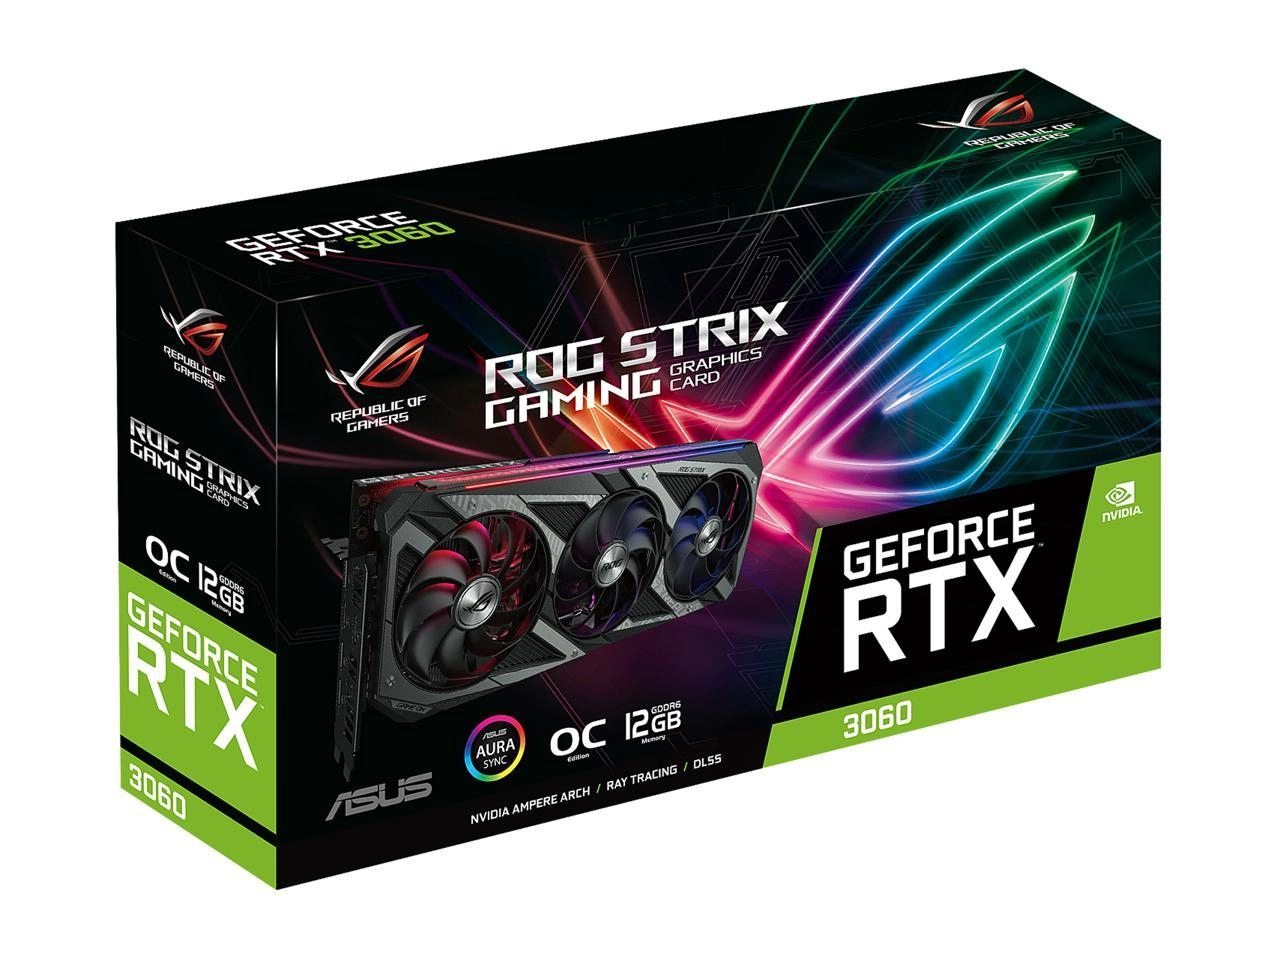 ASUS ROG Strix GeForce RTX 3060 OC Edition 12GB GDDR6 Package Content